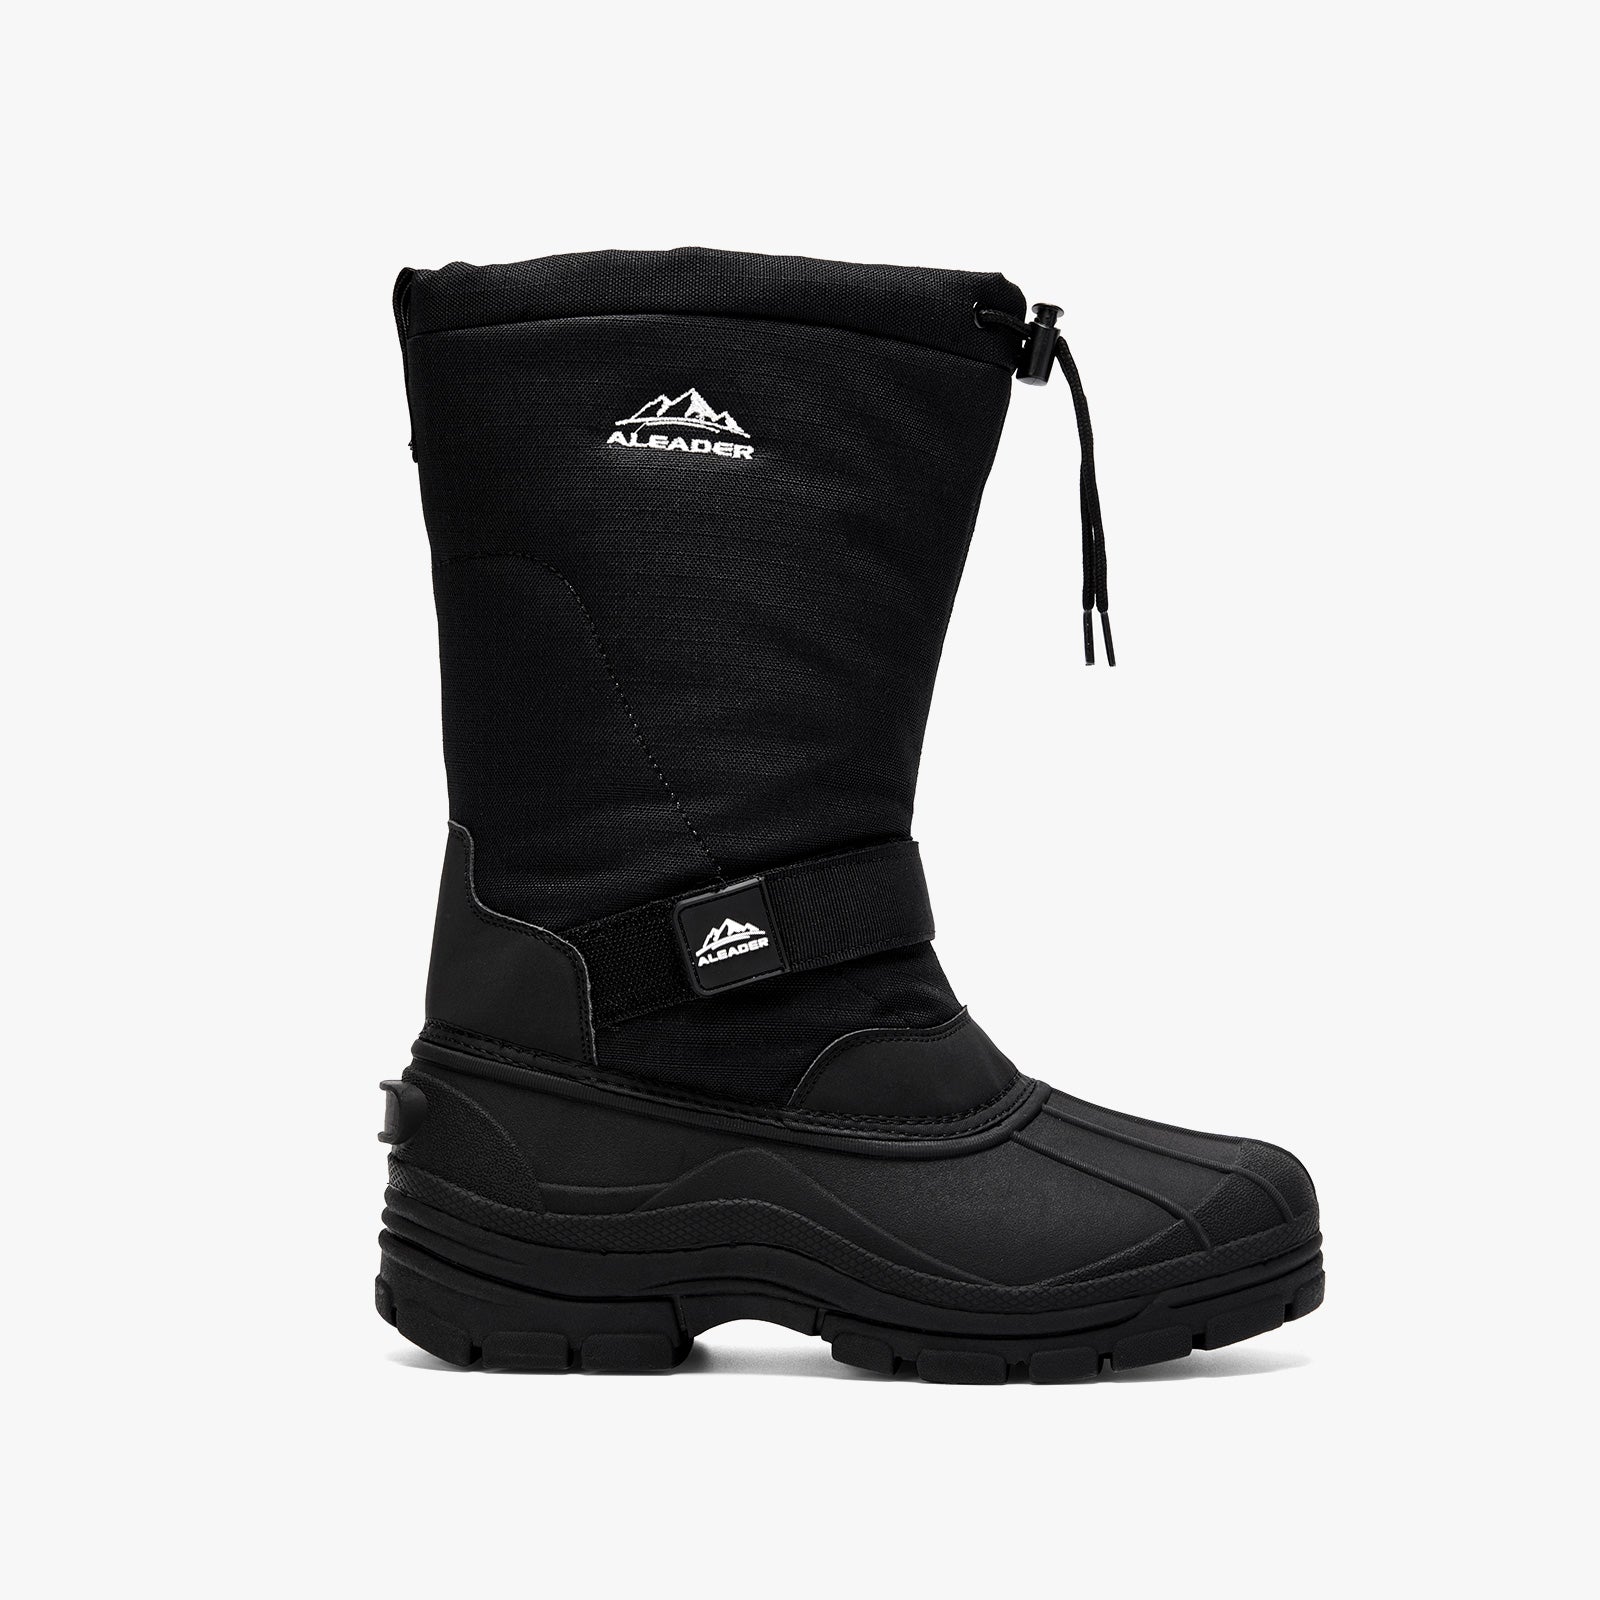 Aleader Men’s Insulated Waterproof Winter Snow Boots - Black